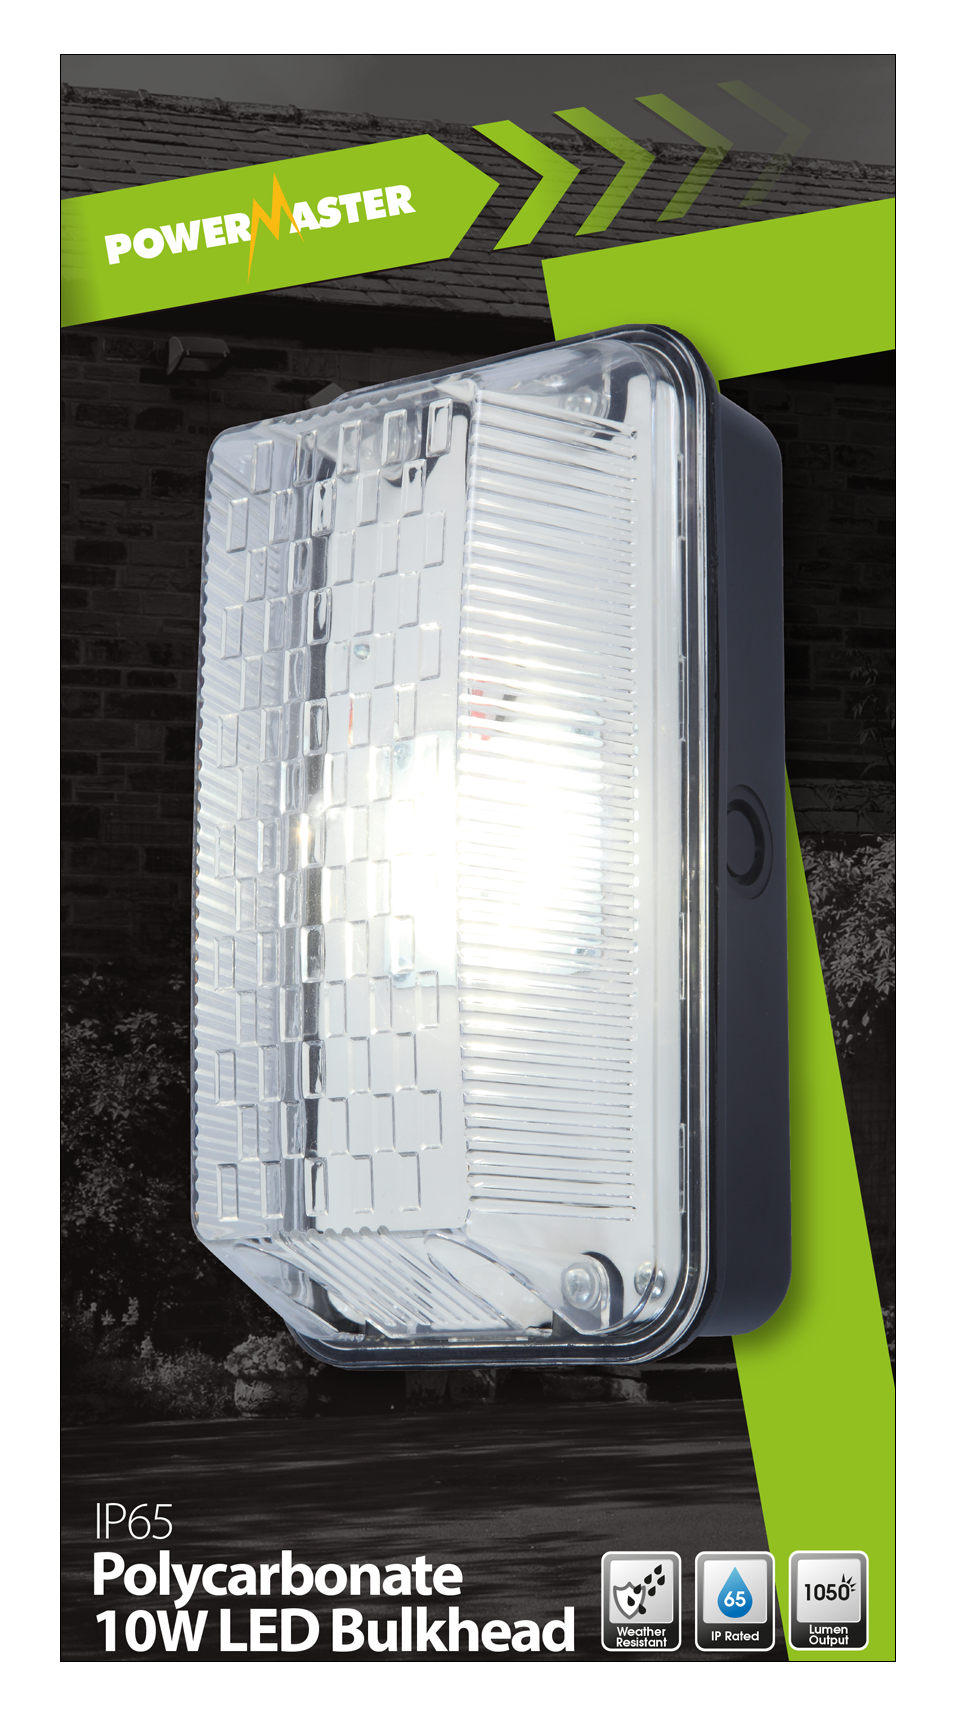 Mampara de policarbonato rectangular LED para exteriores PowerMaster